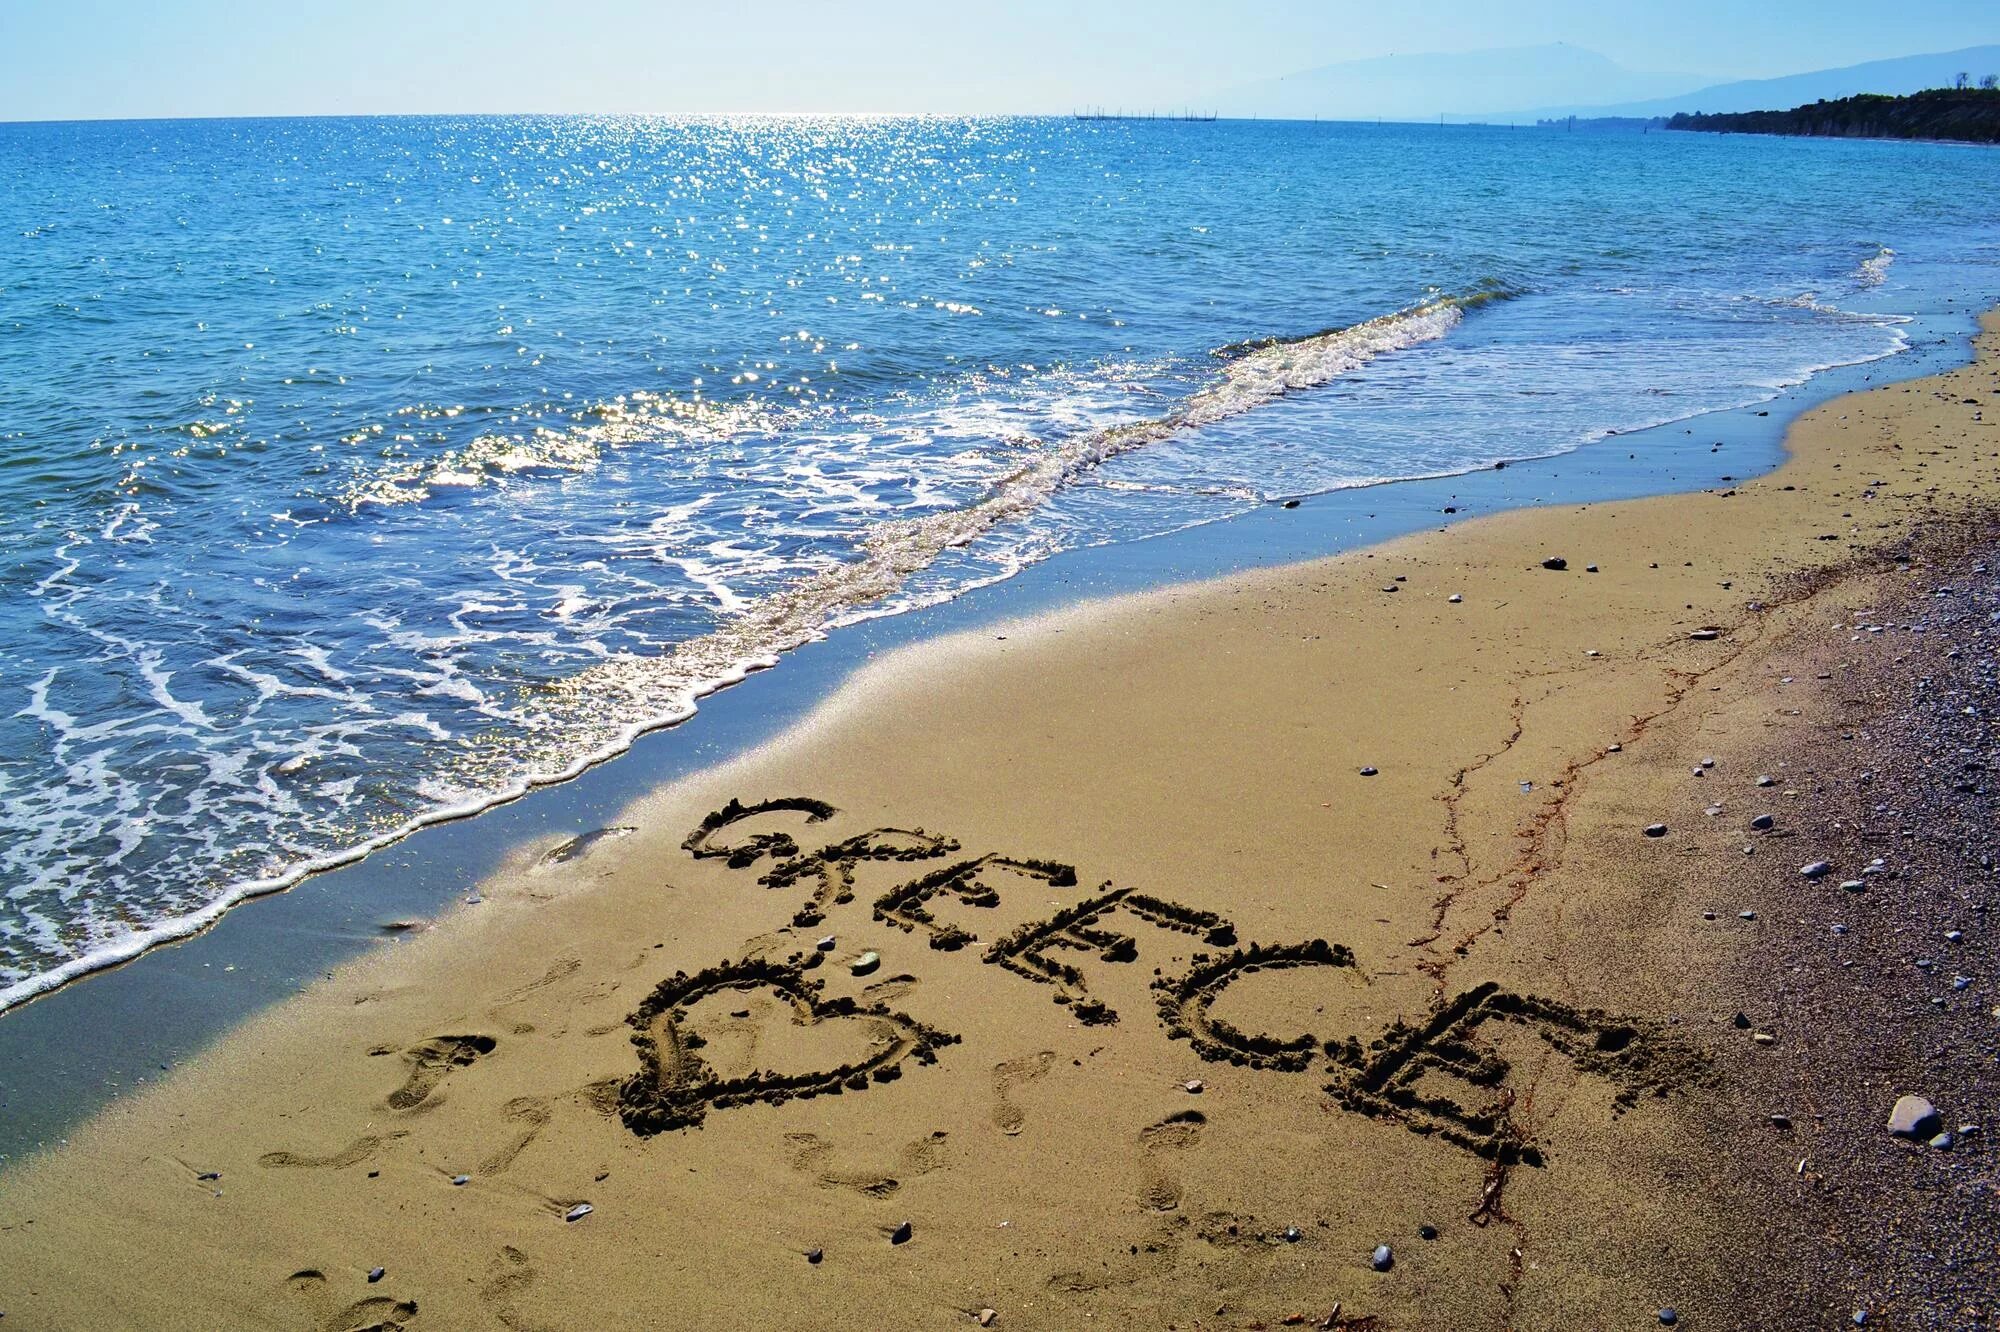 Добро на греческом. Надпись на песке. Надпись на песке на море. Греция море любовь. Отдых на море.